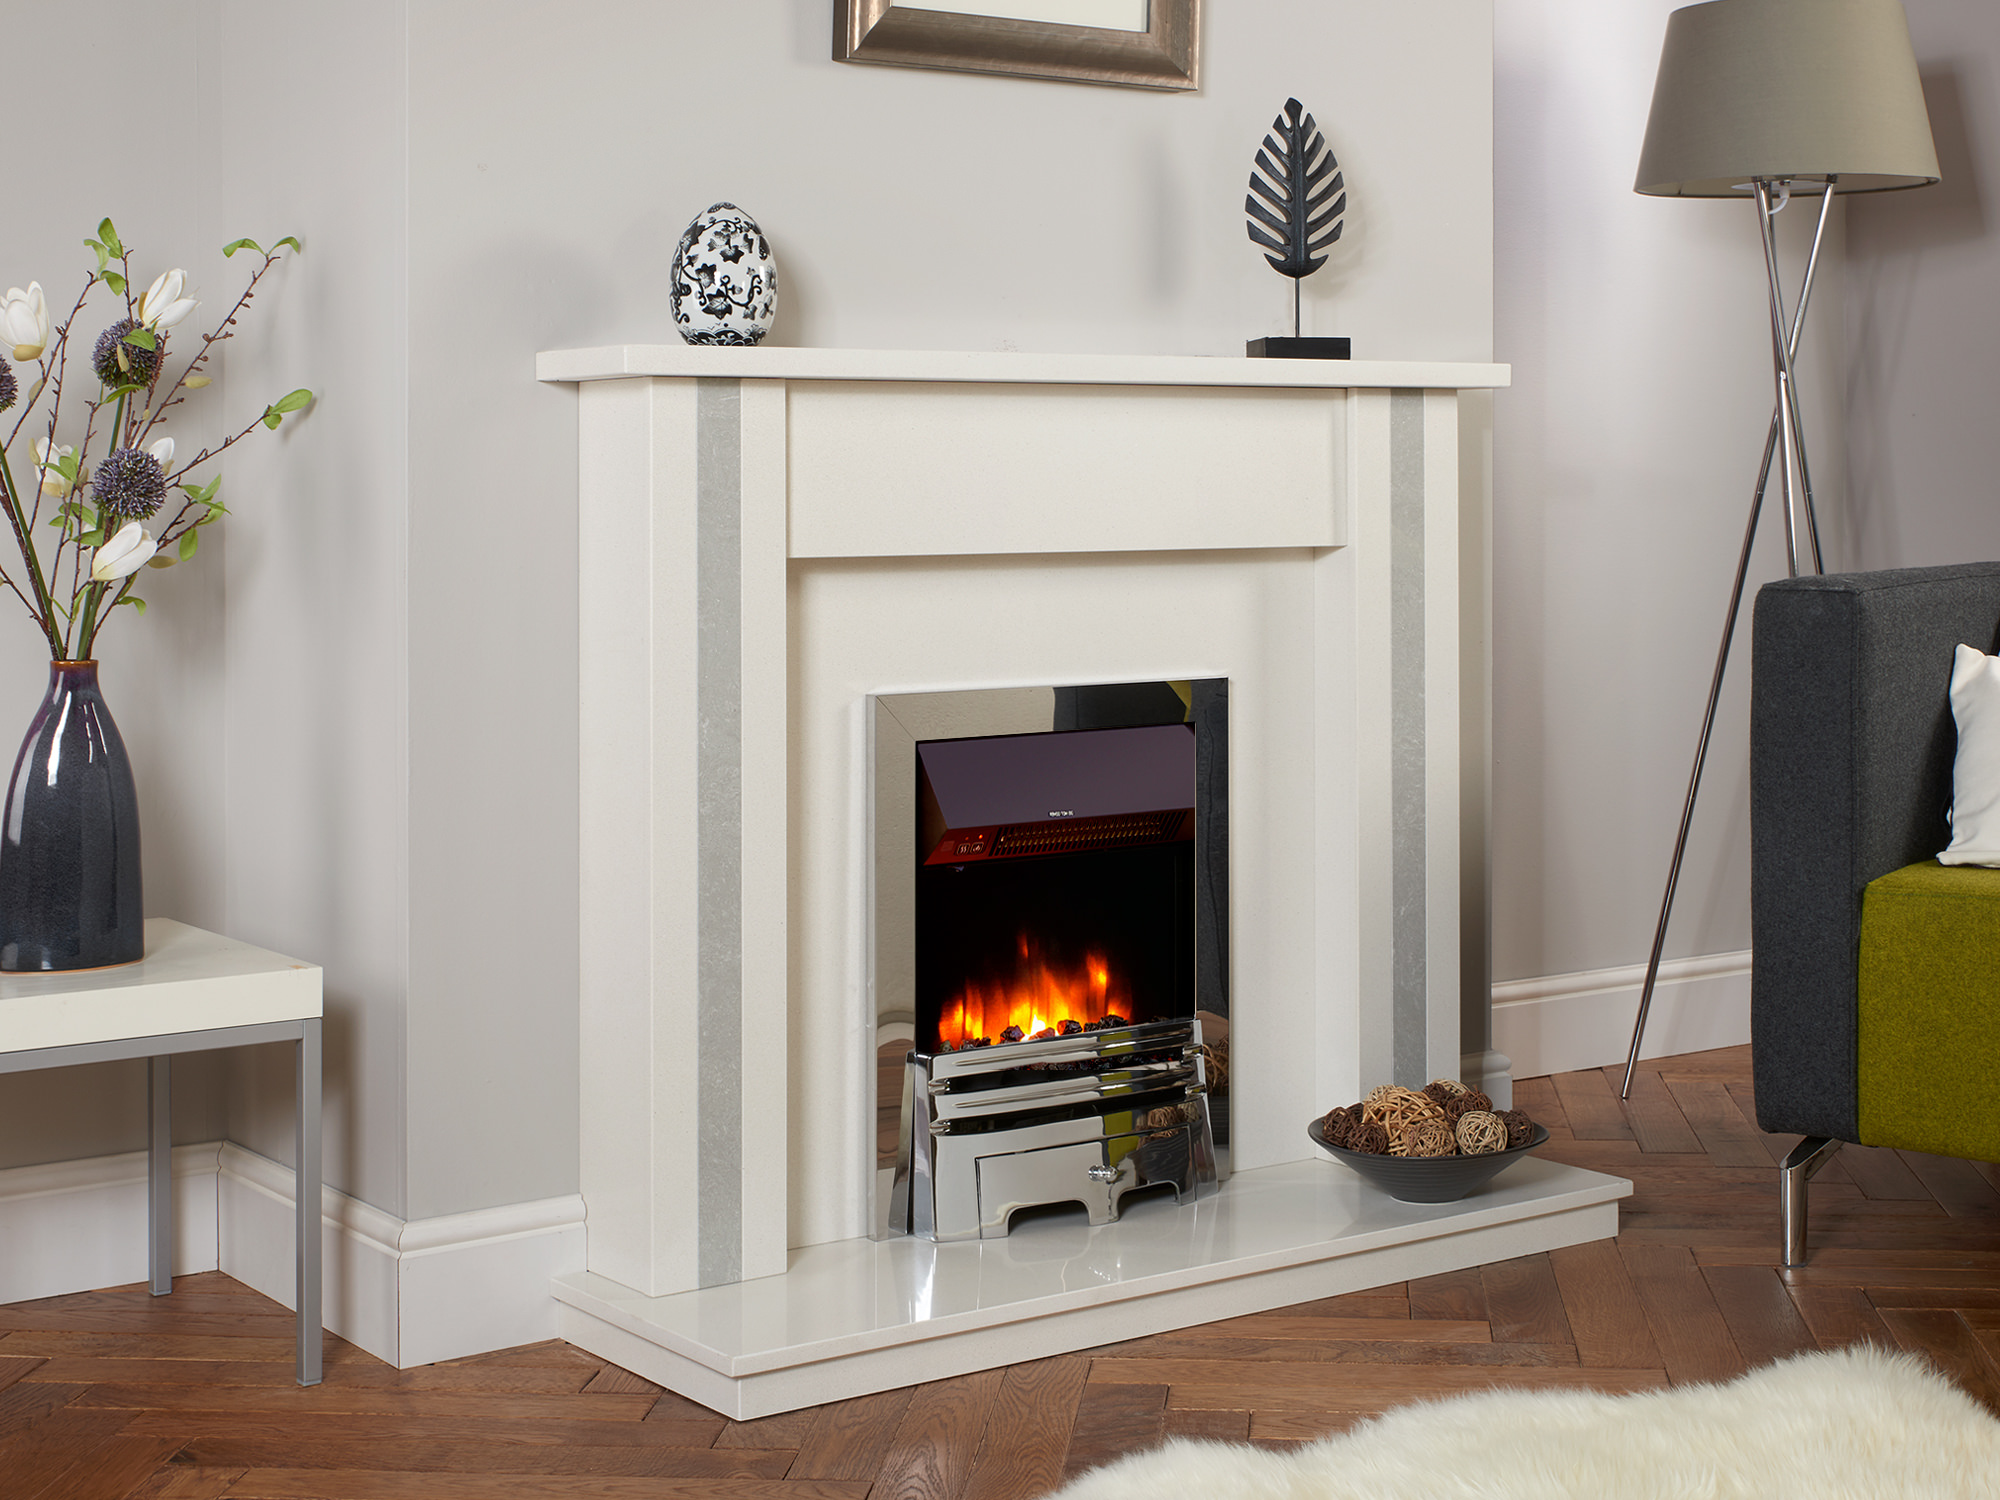 Designer-Fireplaces-Sanderson-Marble-Electric-Fire-Suite